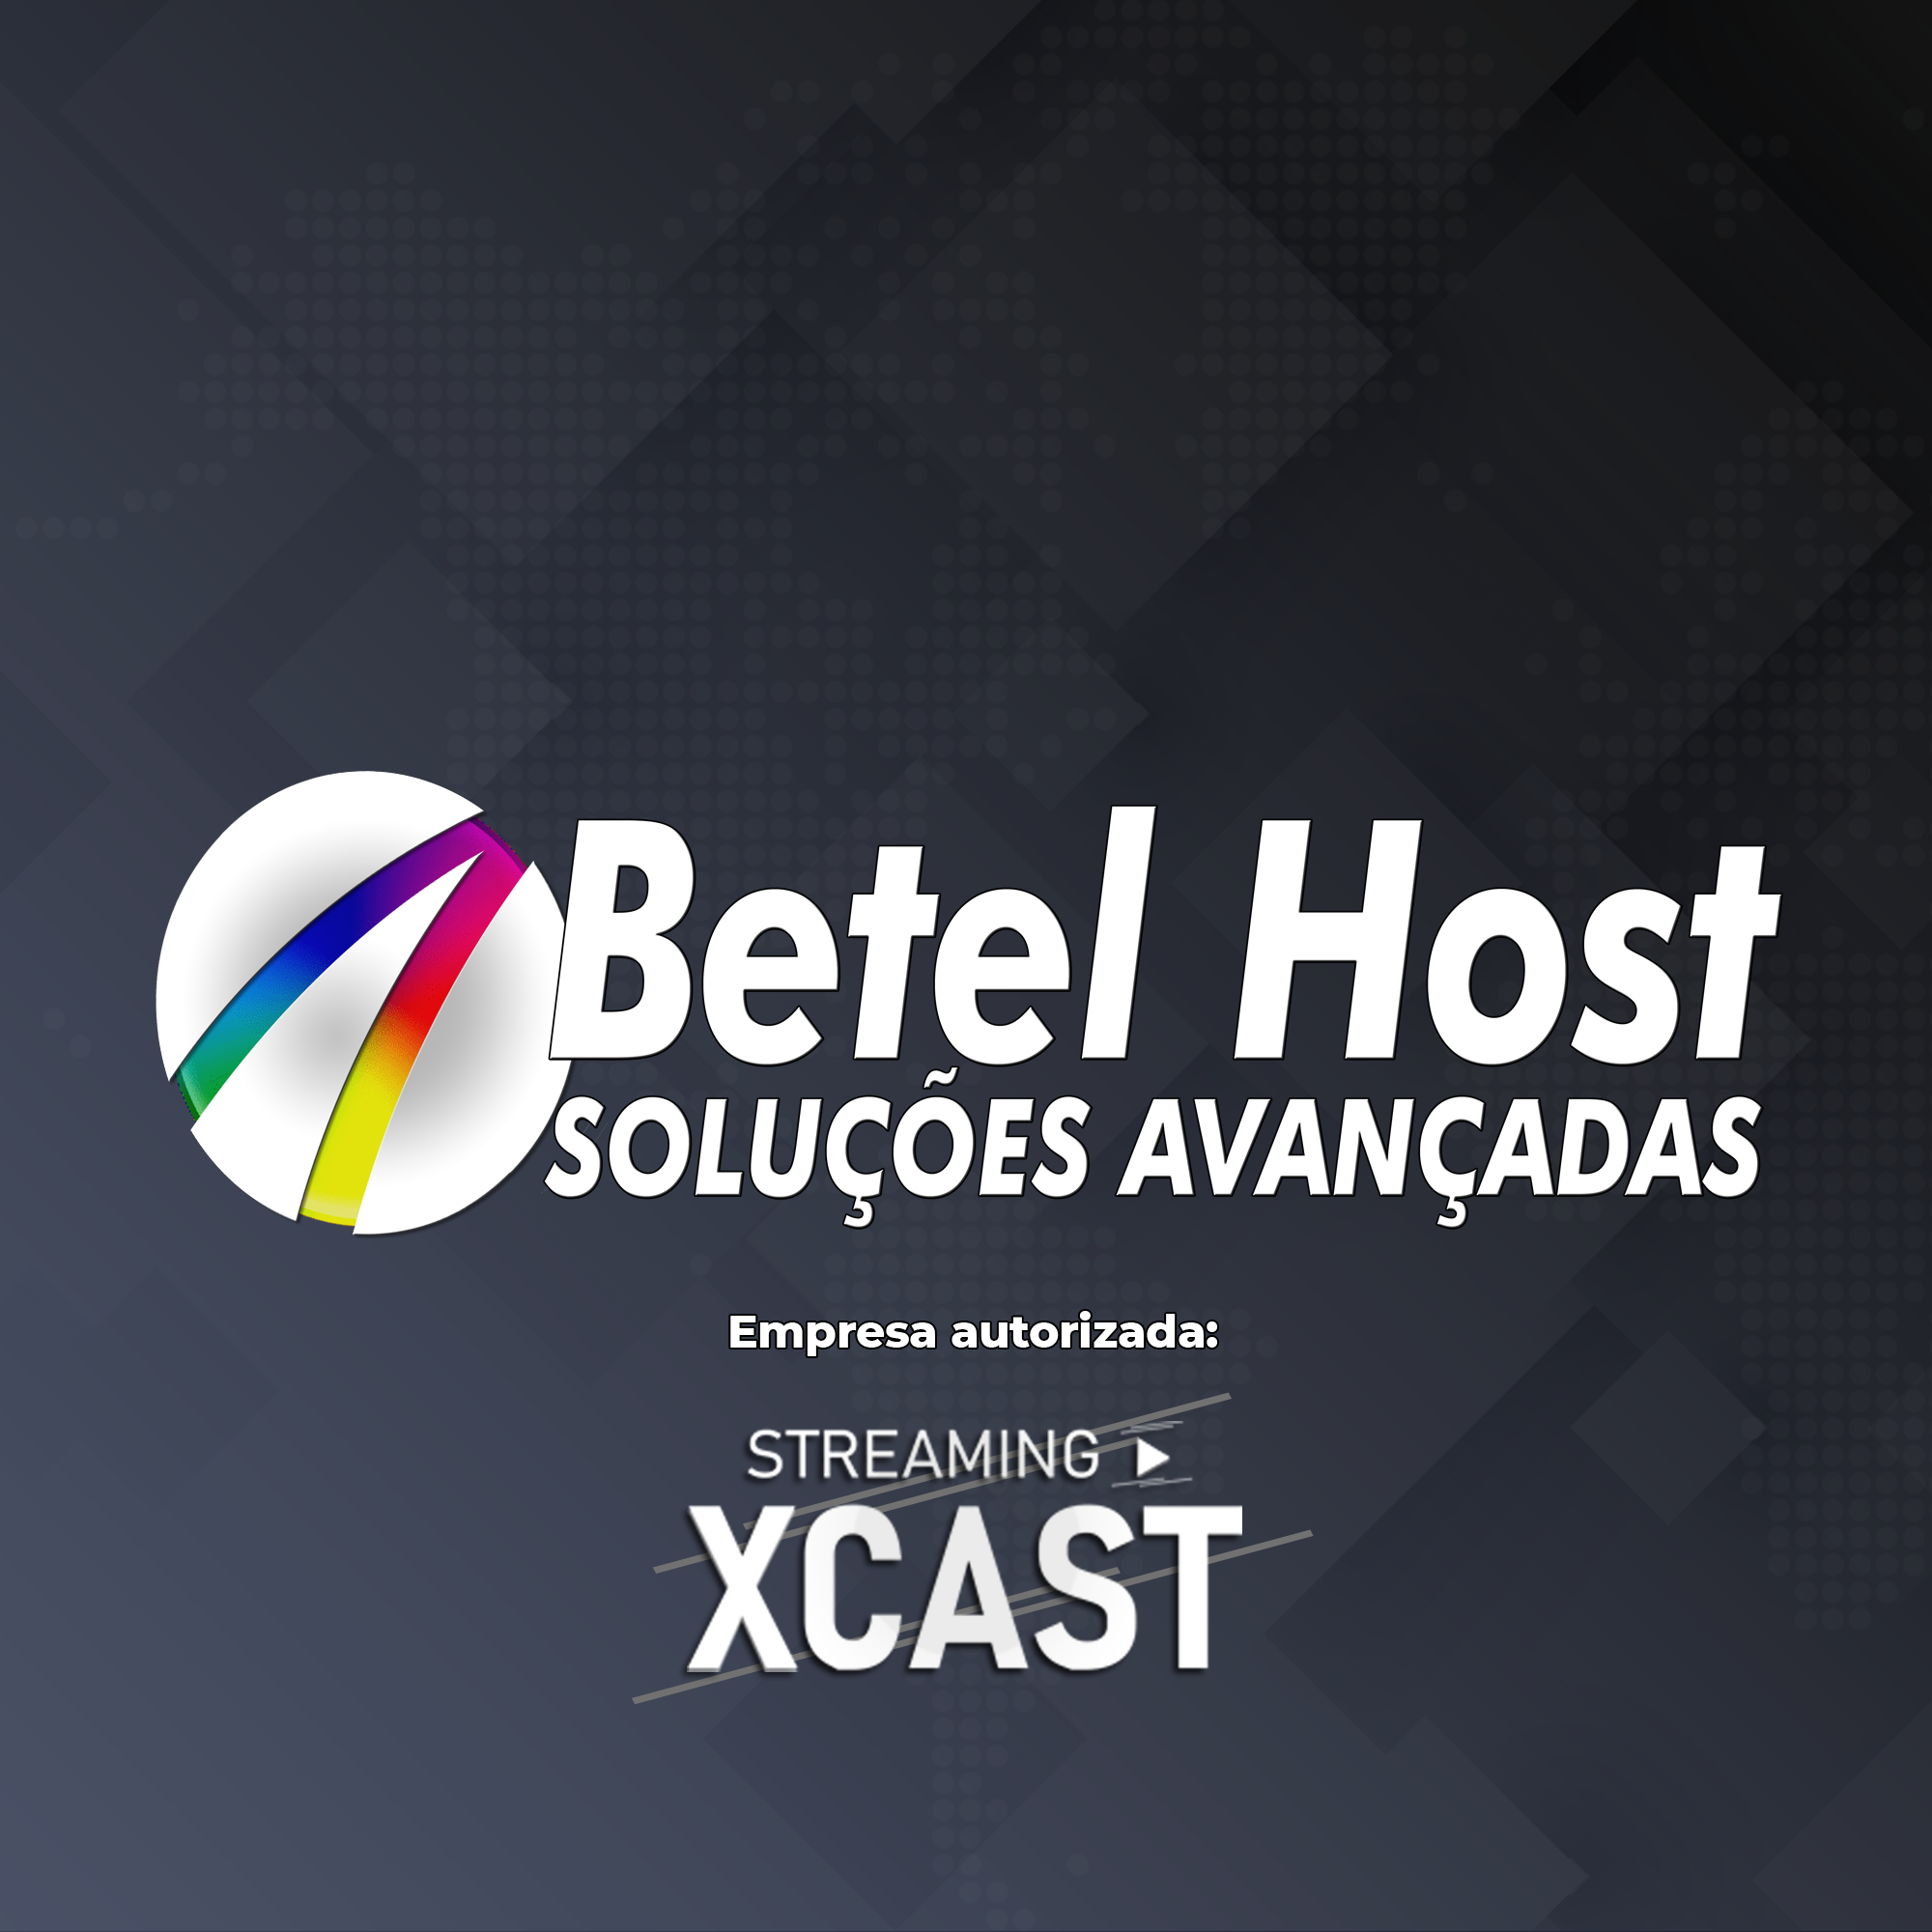 (c) Betelhost.com.br